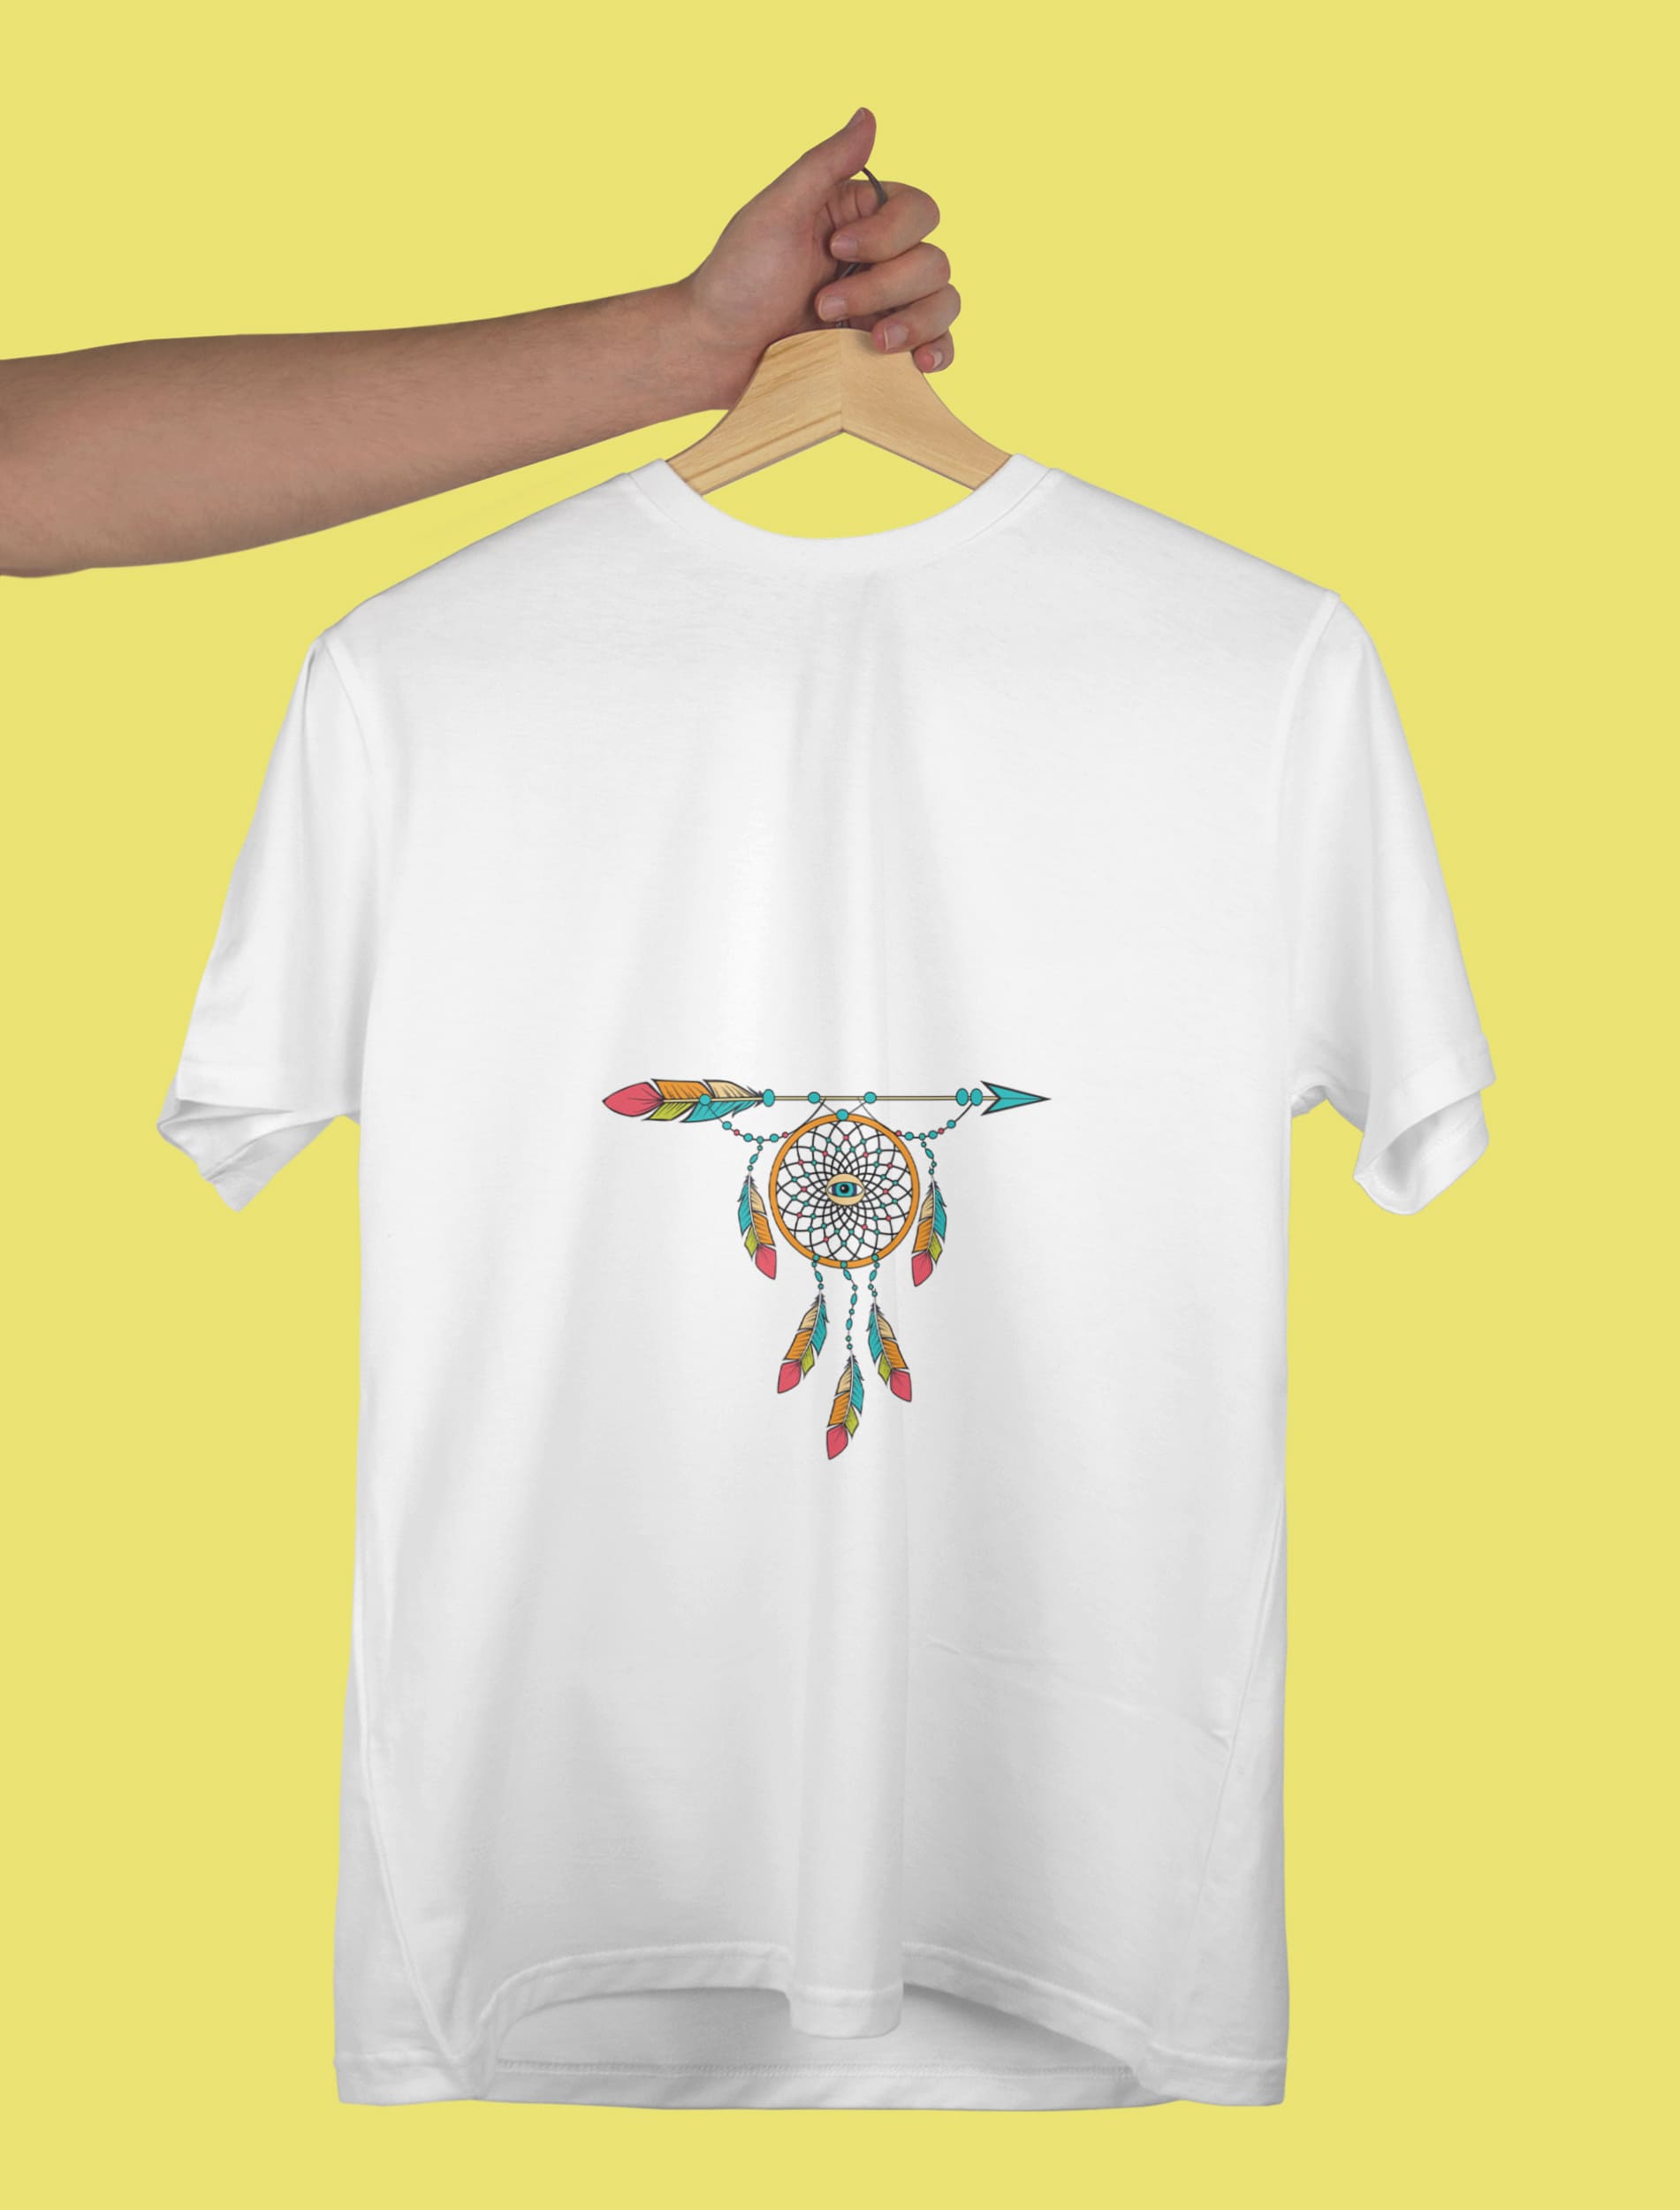 GBoho hippie themed t-shirt design.